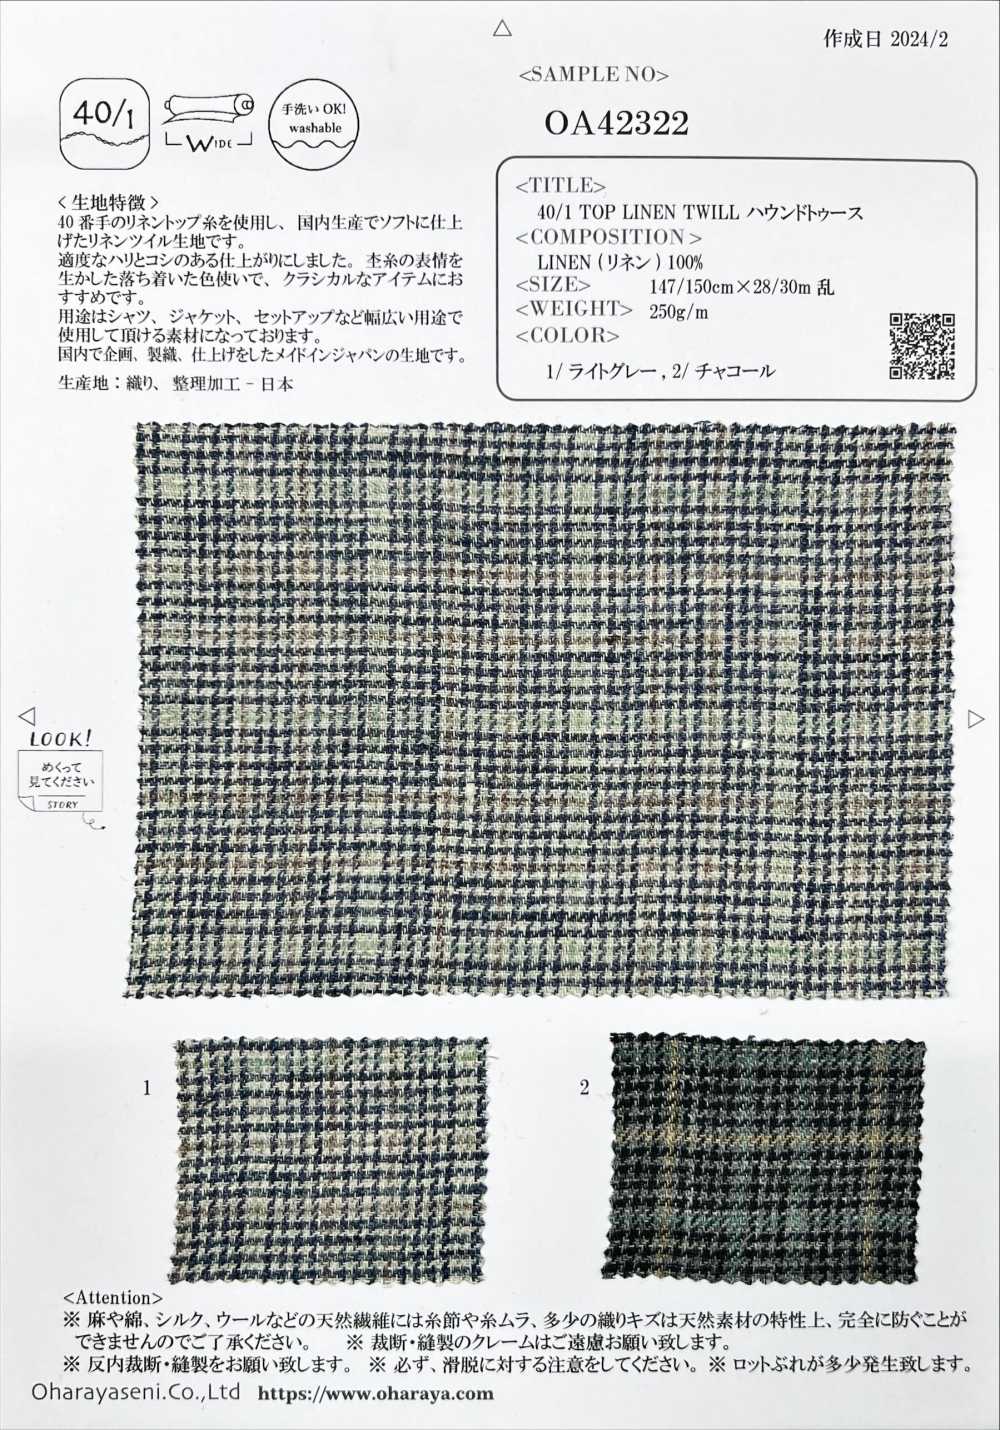 OA42322 40/1 TOP LEINEN TWILL Hahnentritt[Textilgewebe] Oharayaseni